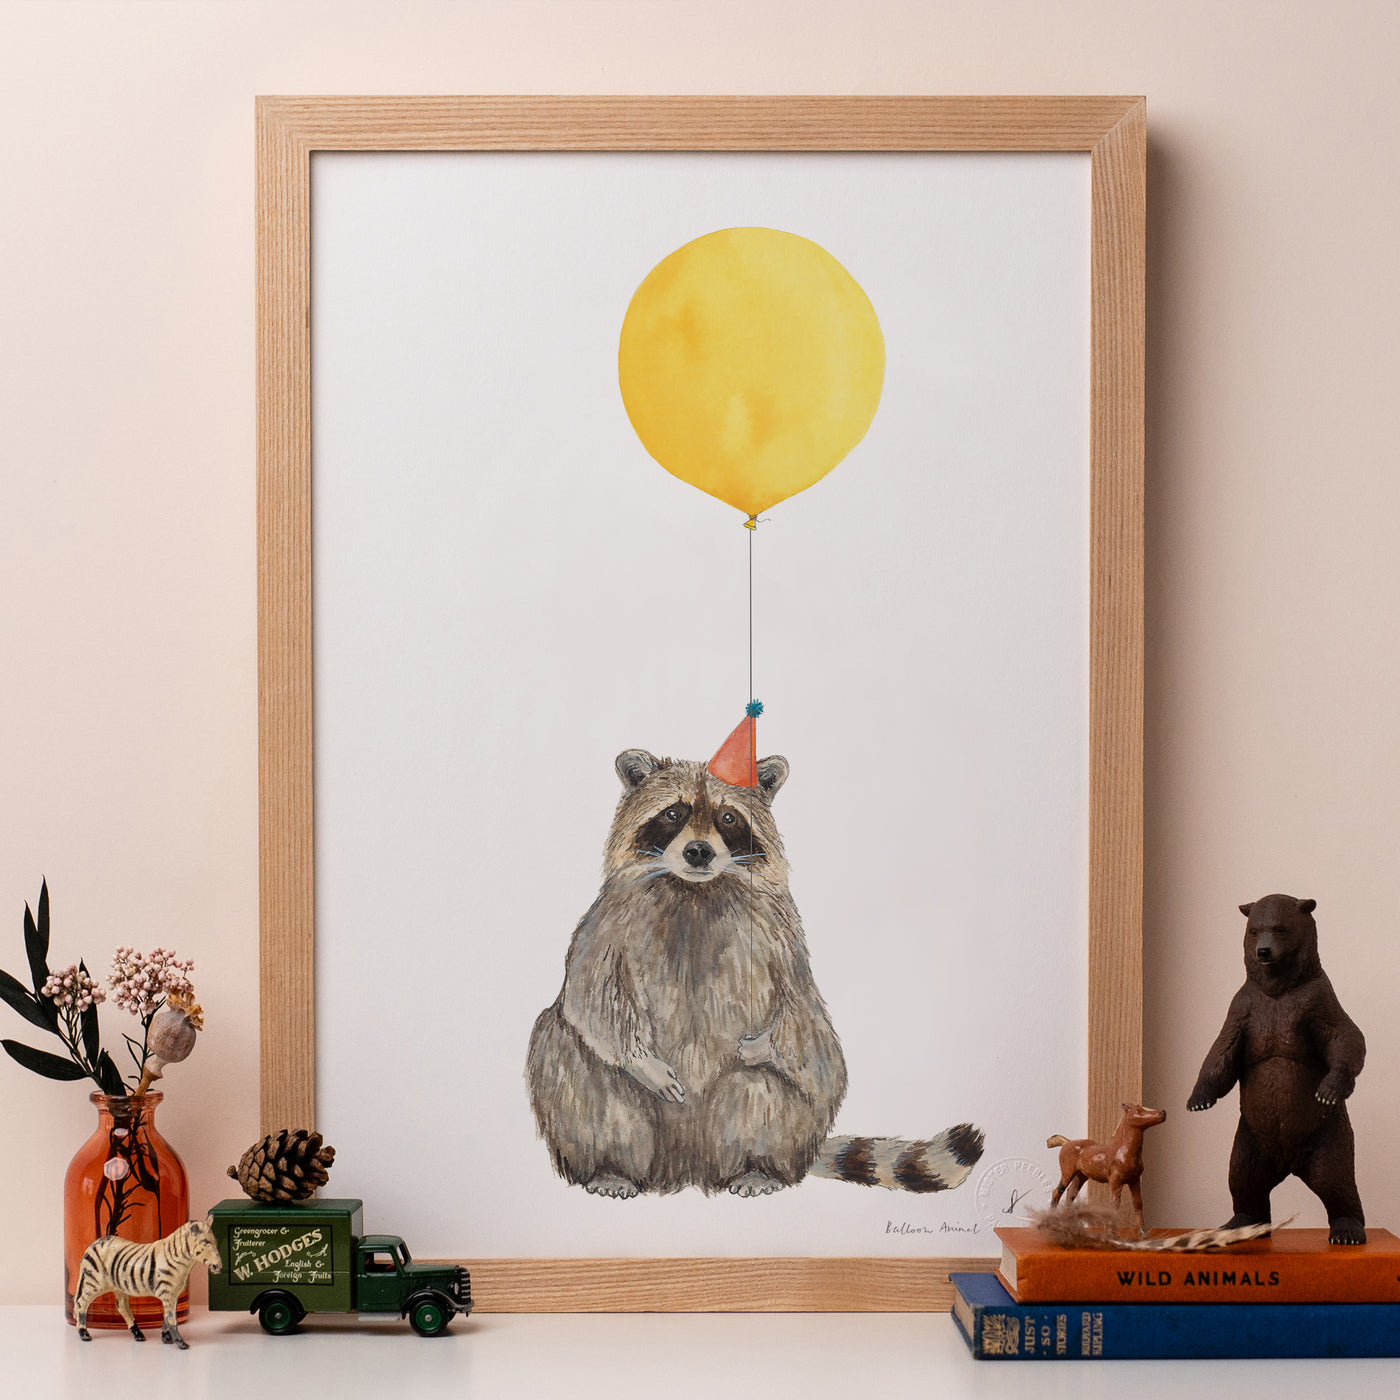 Balloon Animal Print - Raccoon